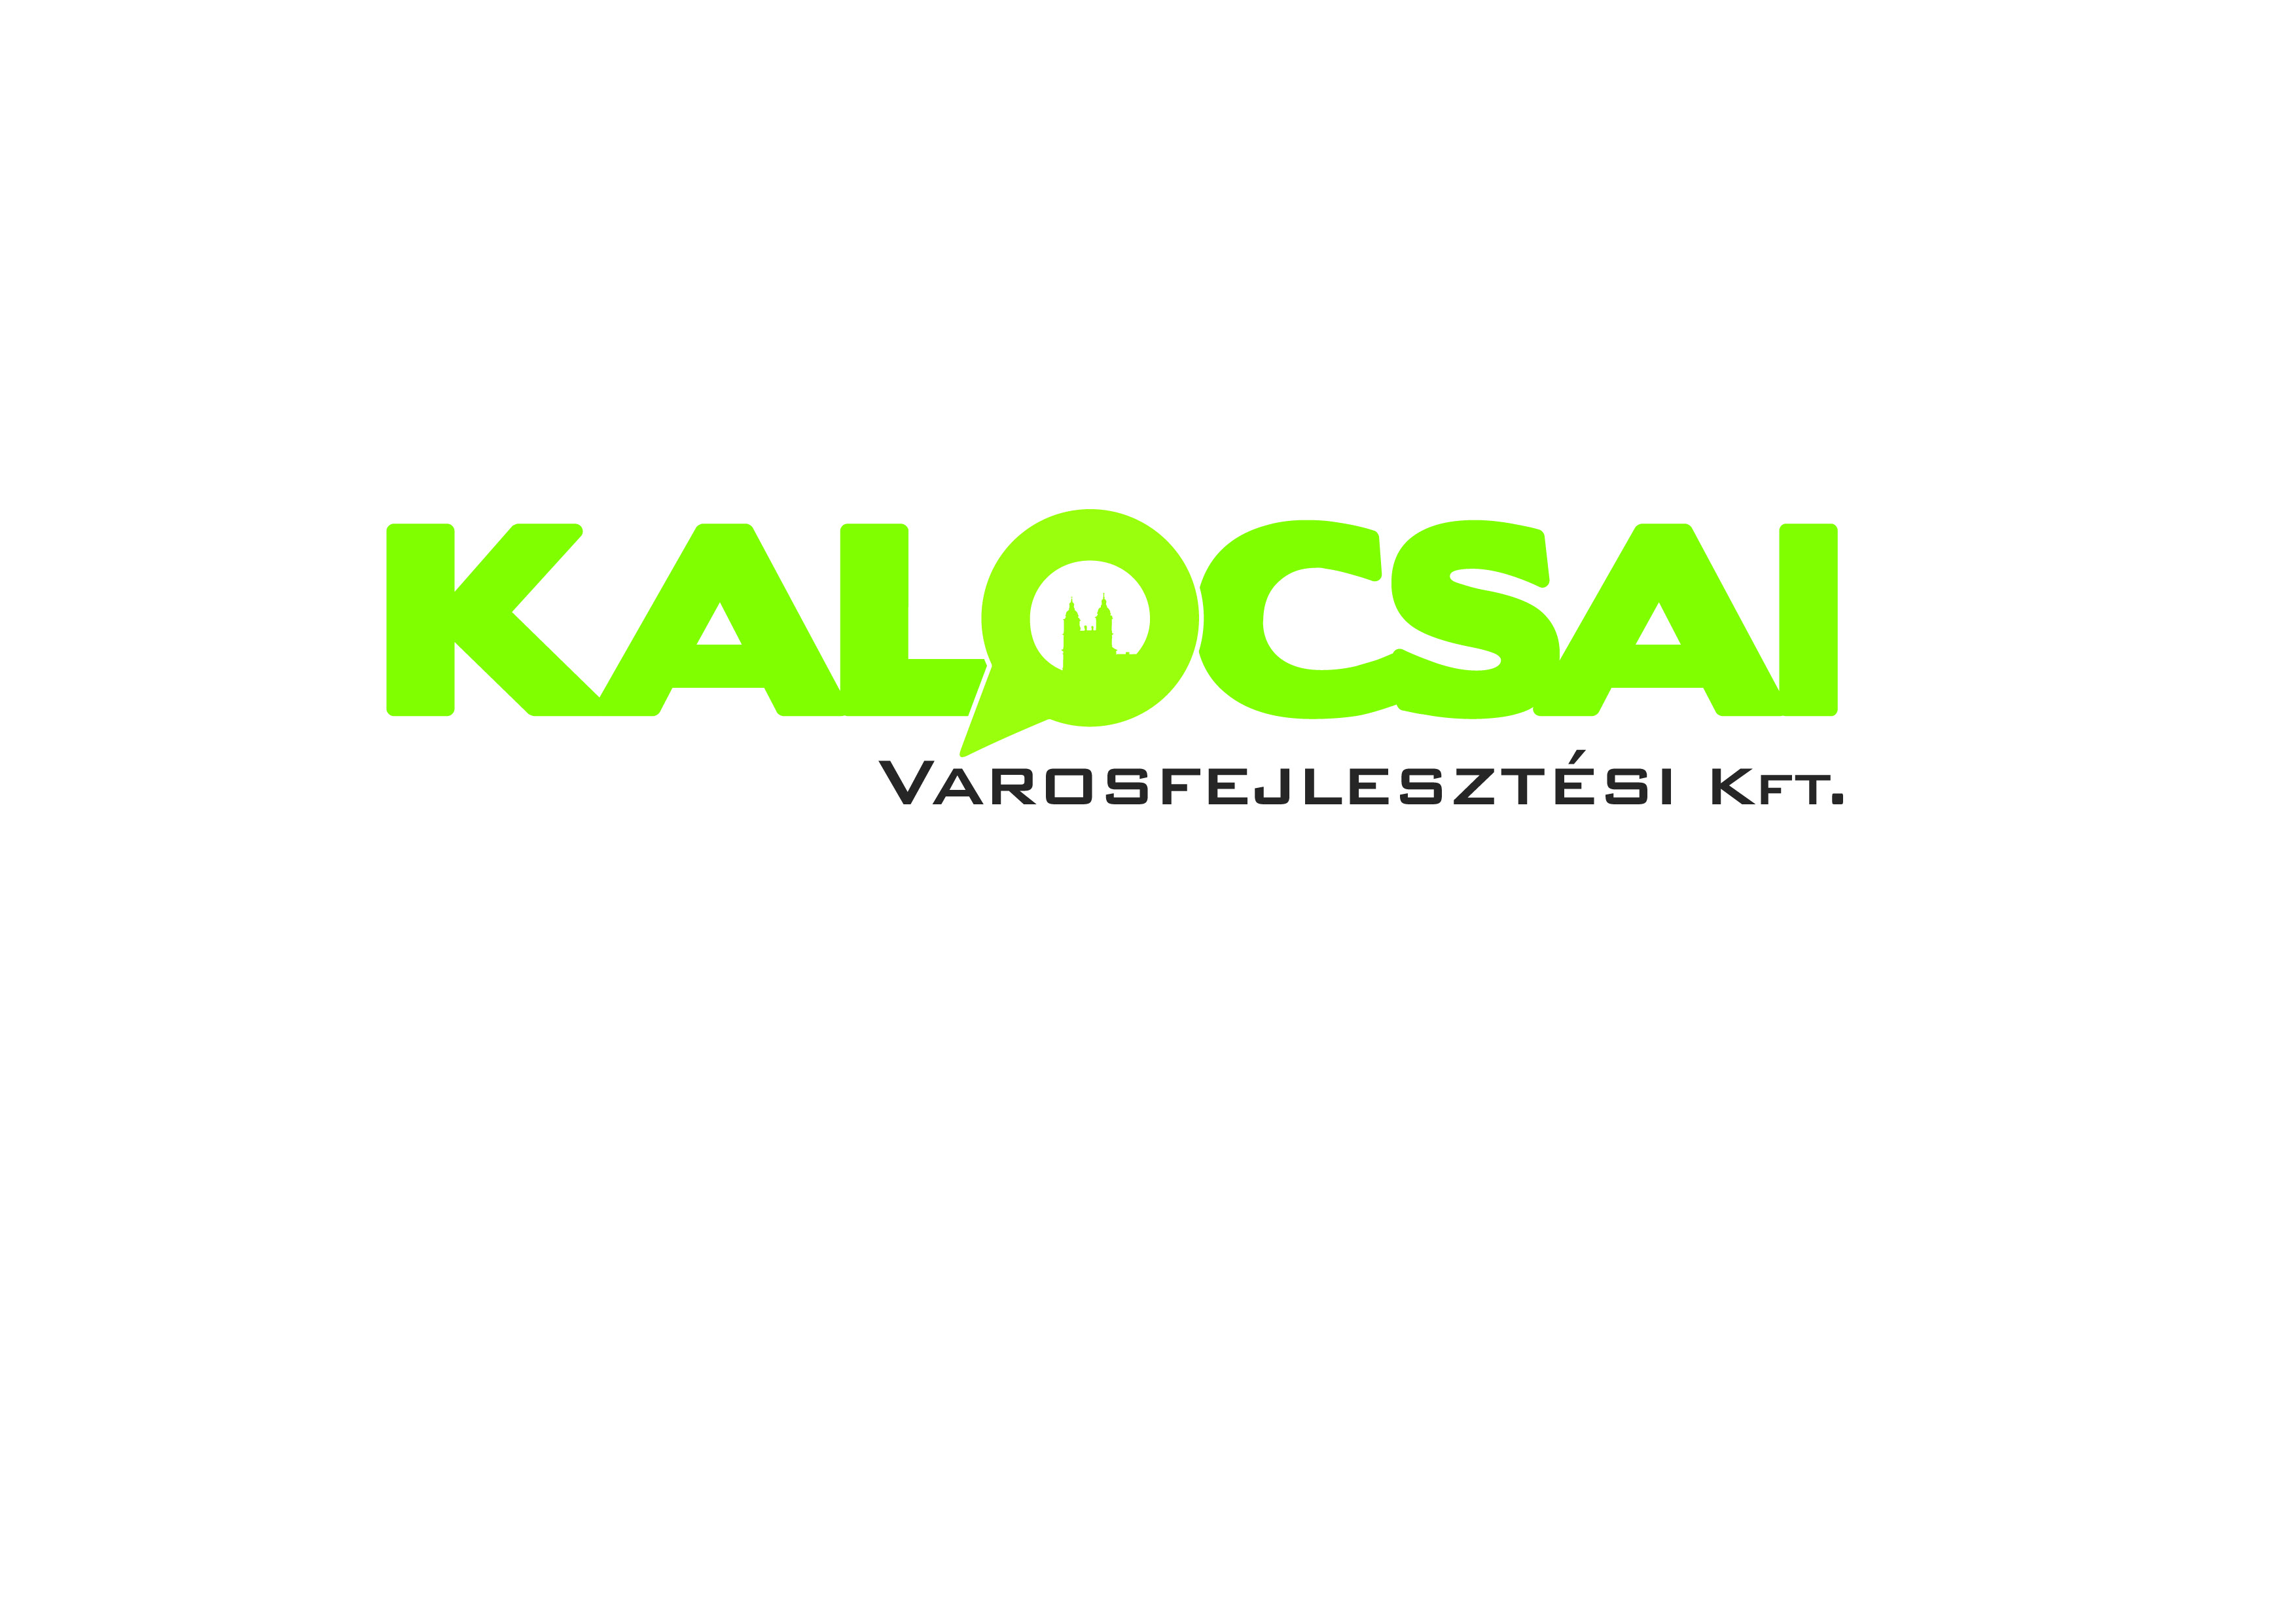 kalocsai_varosfejlesztes_logo_300dpicmyk.jpg